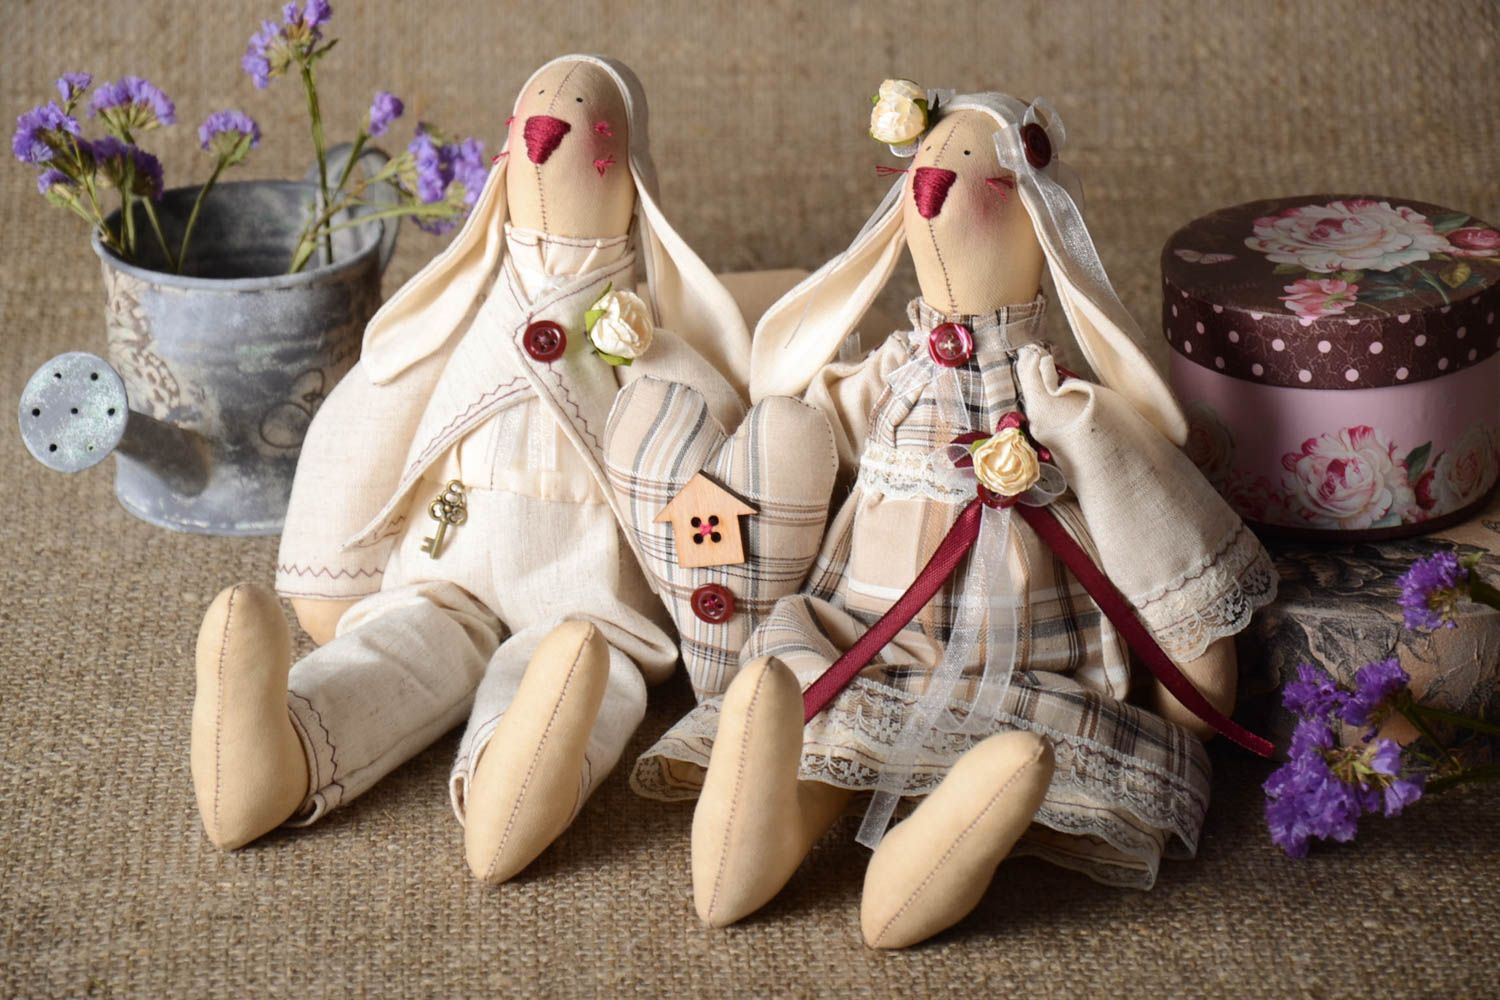 Handmade soft toys stuffed animals rabbit toys nursery decor wedding gift ideas photo 1